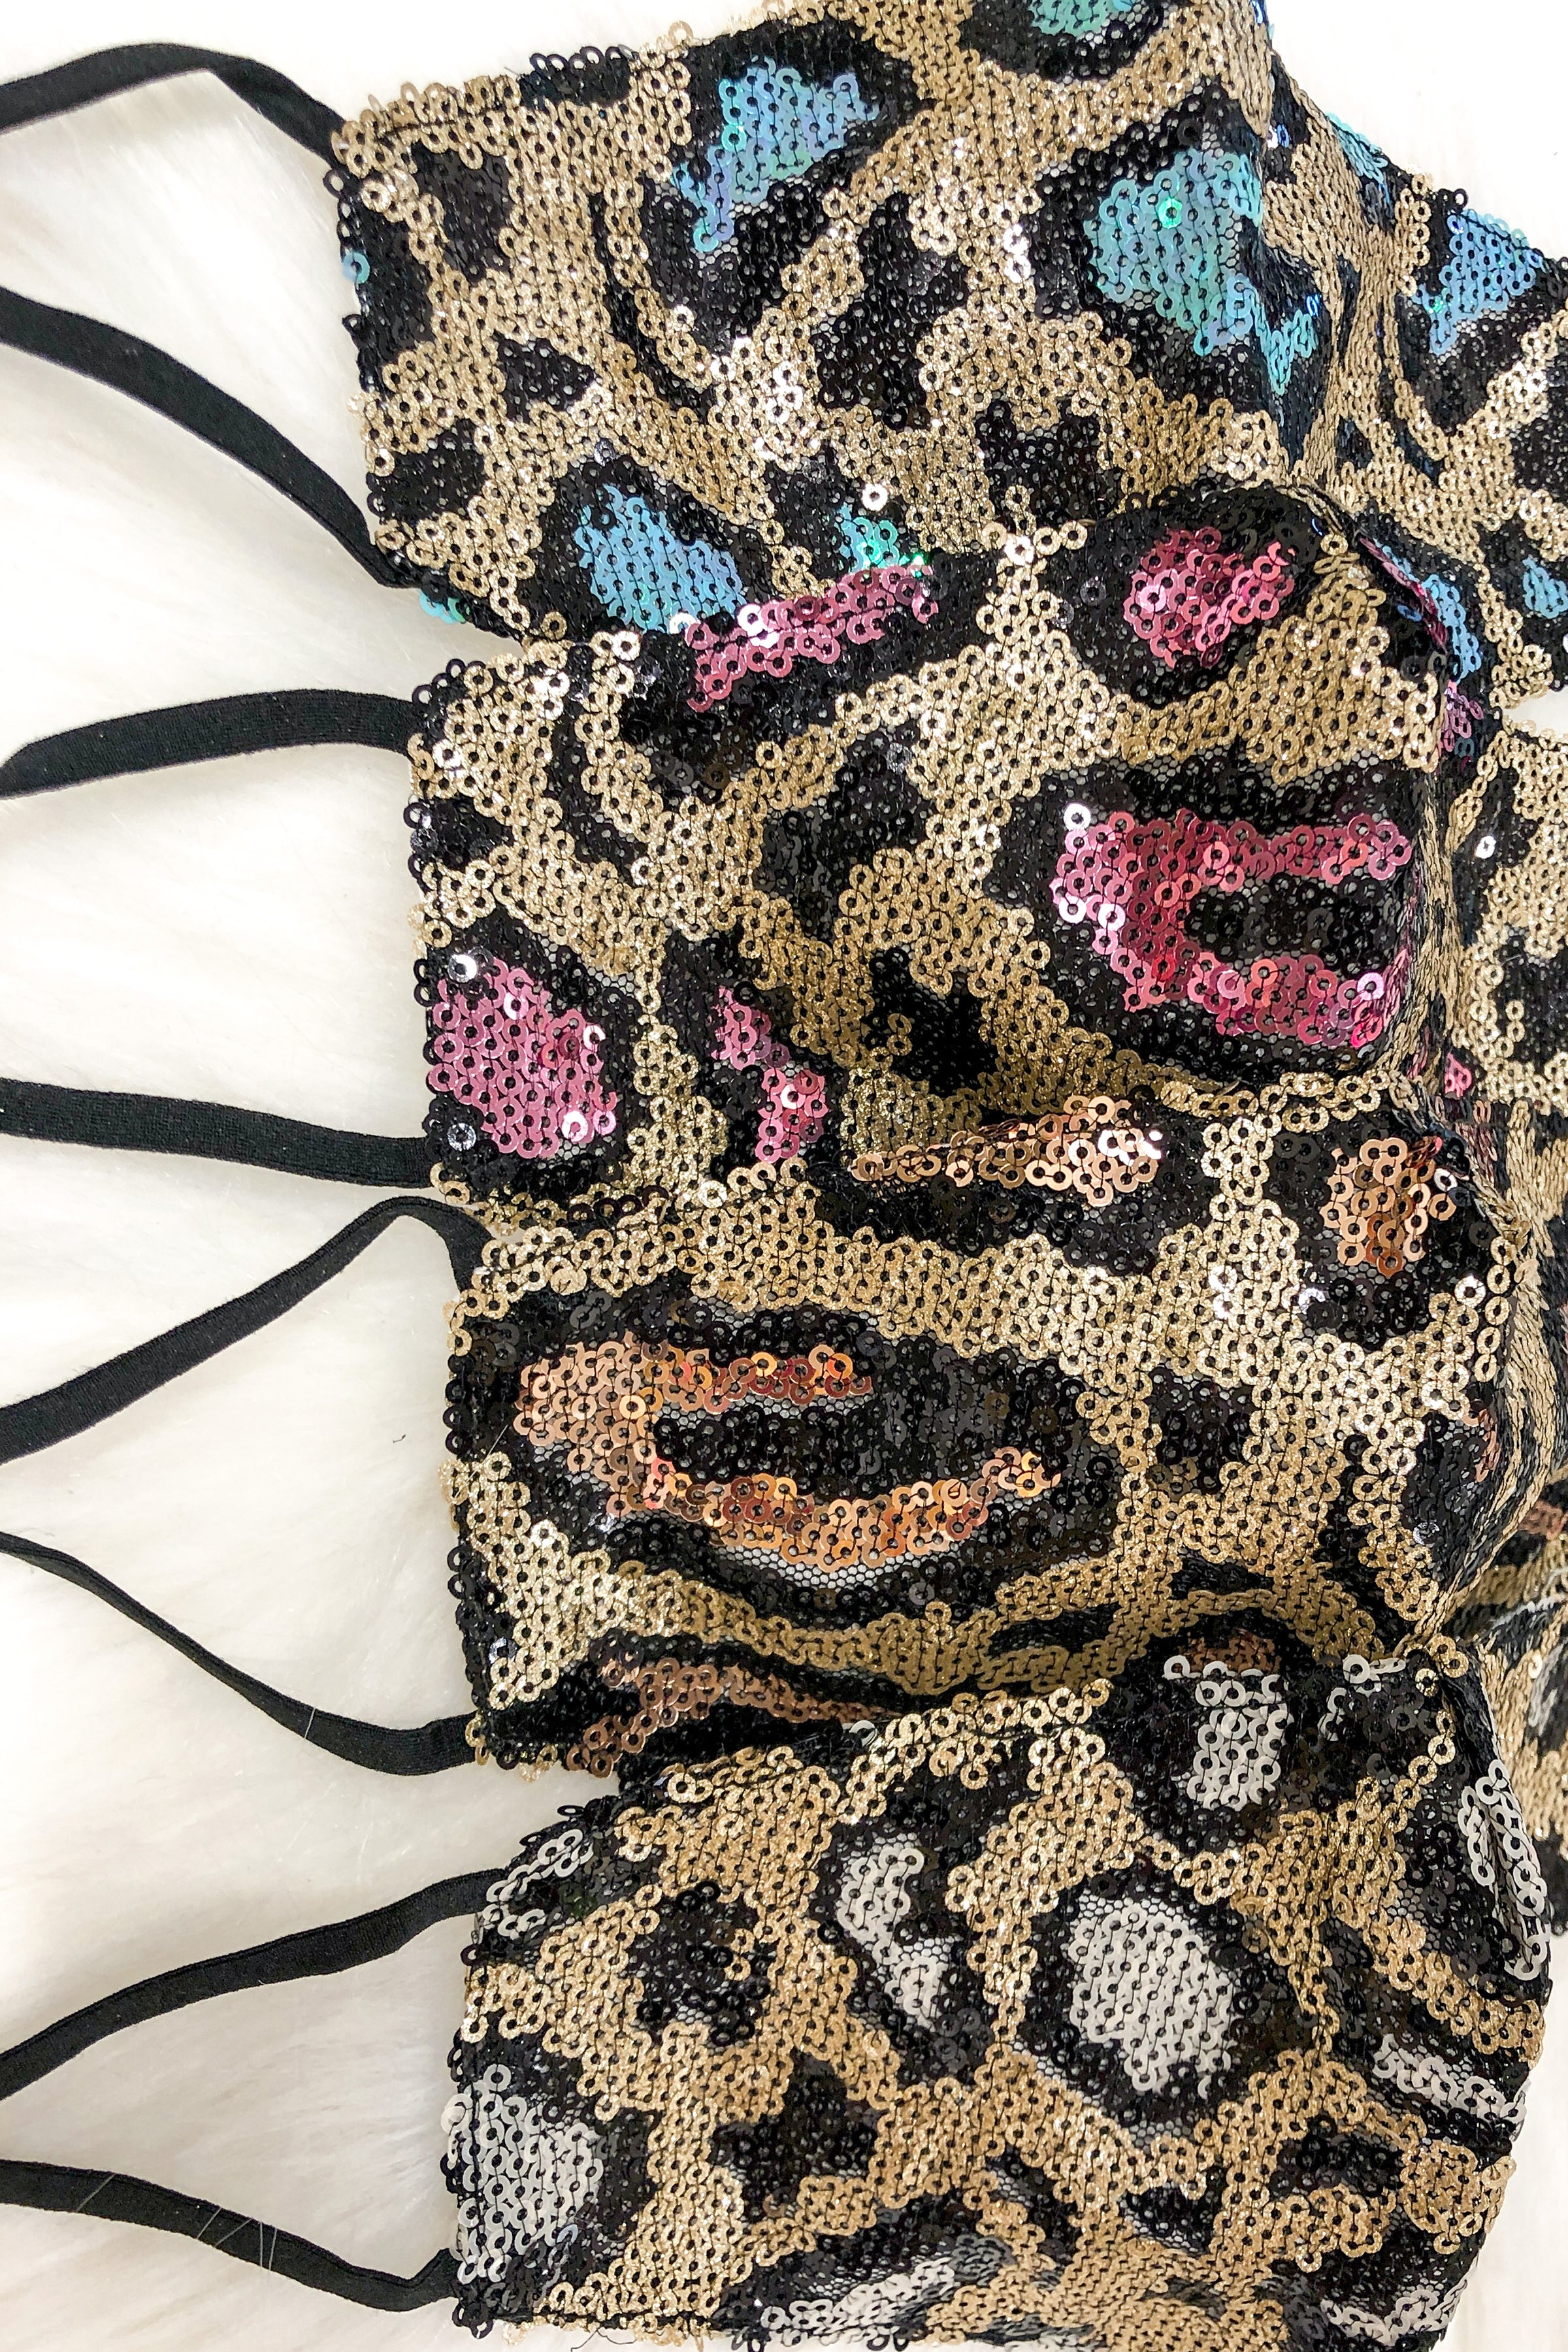 Sequin Leopard Face Masks - Shop Cute Face Masks Online At Kendry Collection Boutique